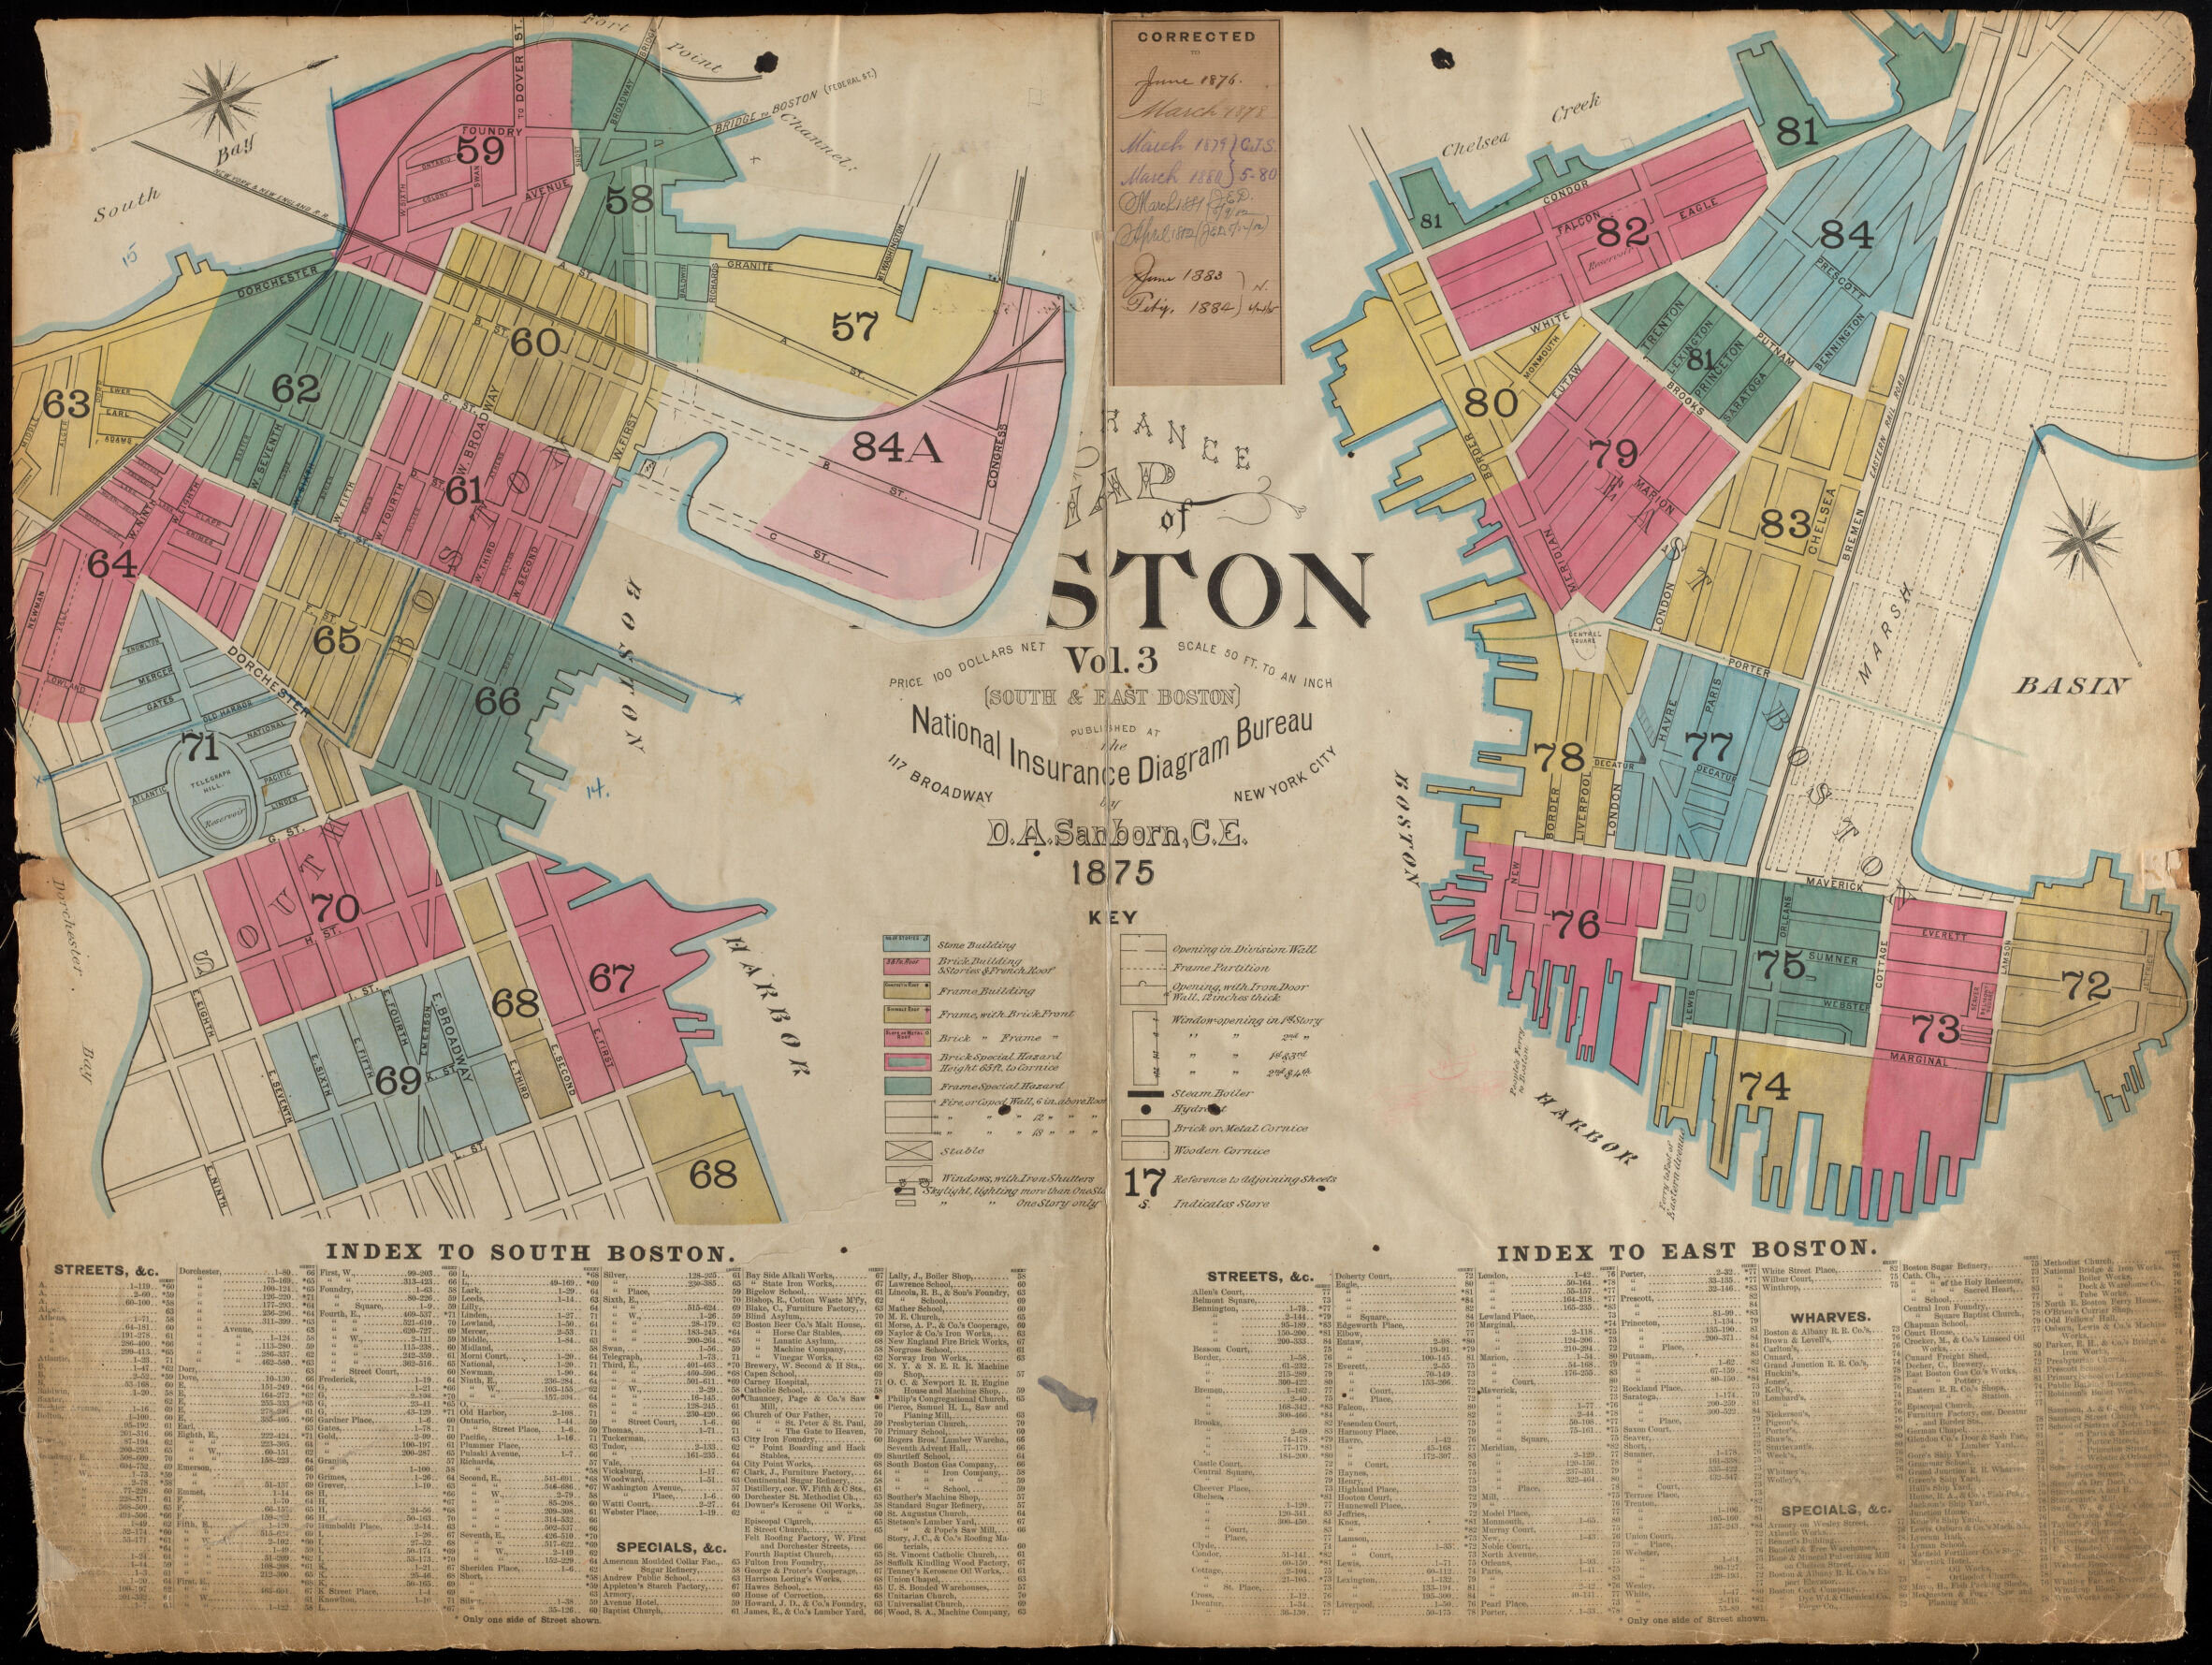 Insurance map of Boston vol. 3 (South & East Boston)